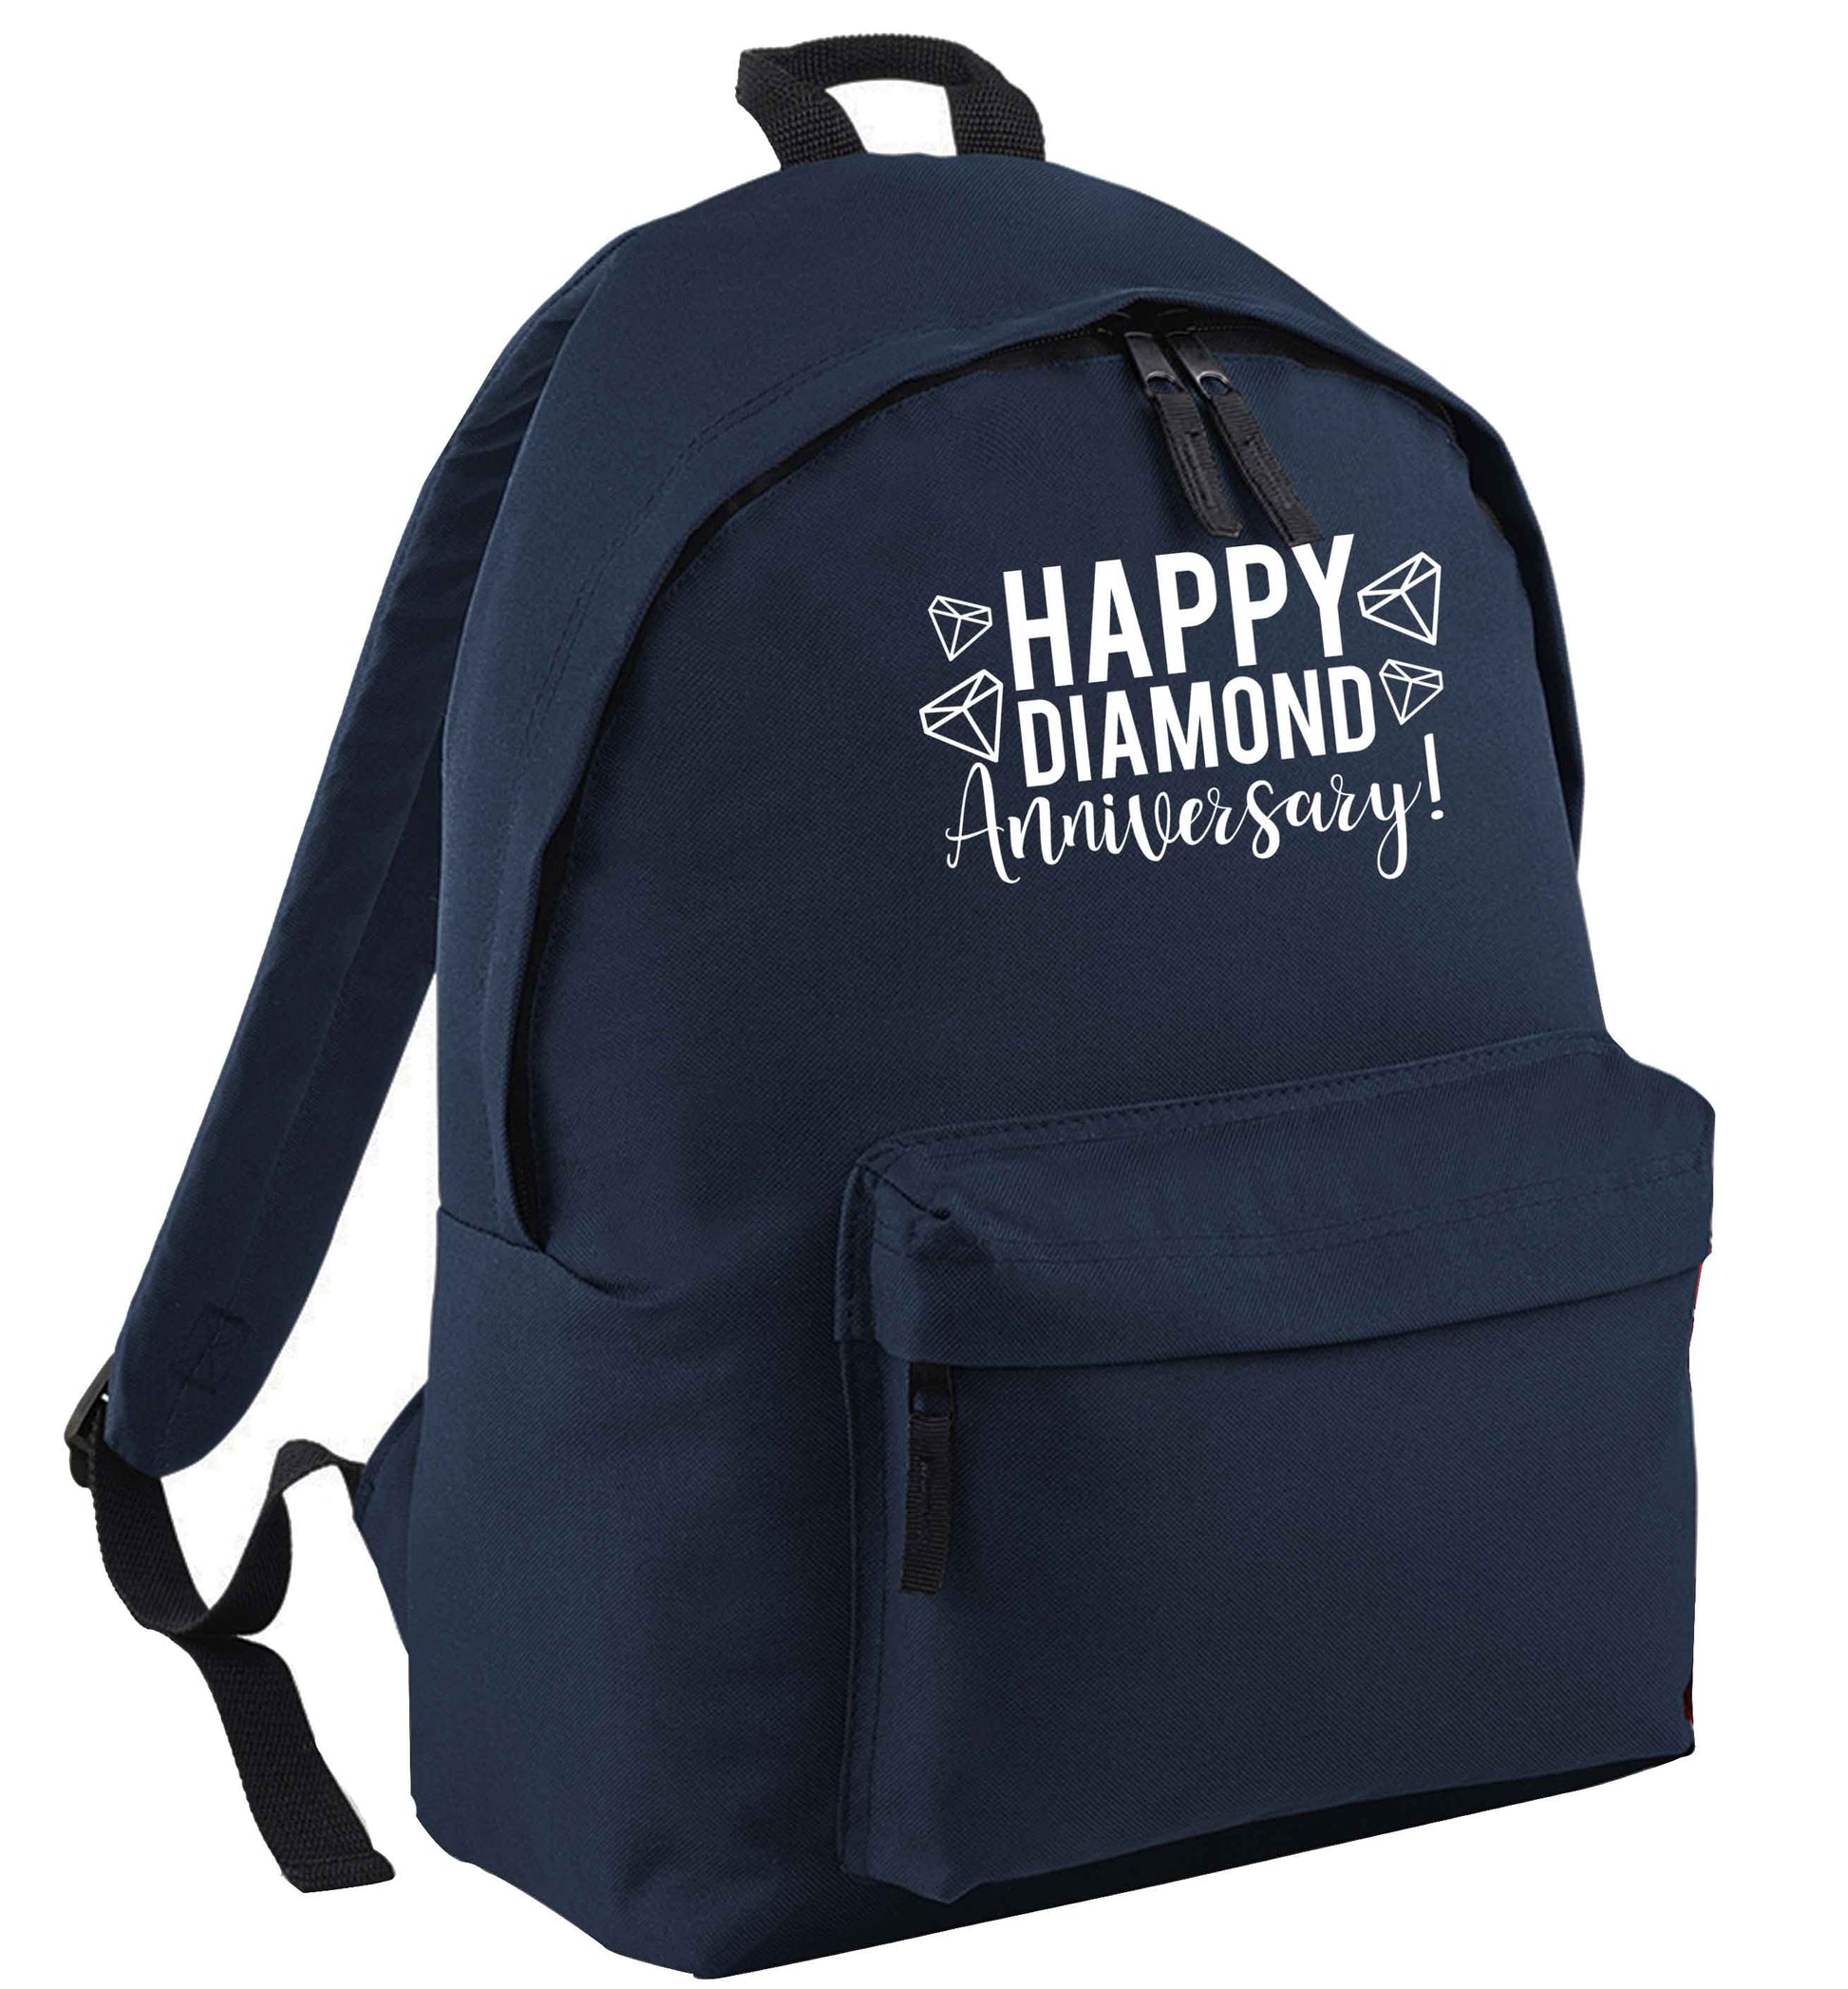 Happy diamond anniversary! navy adults backpack